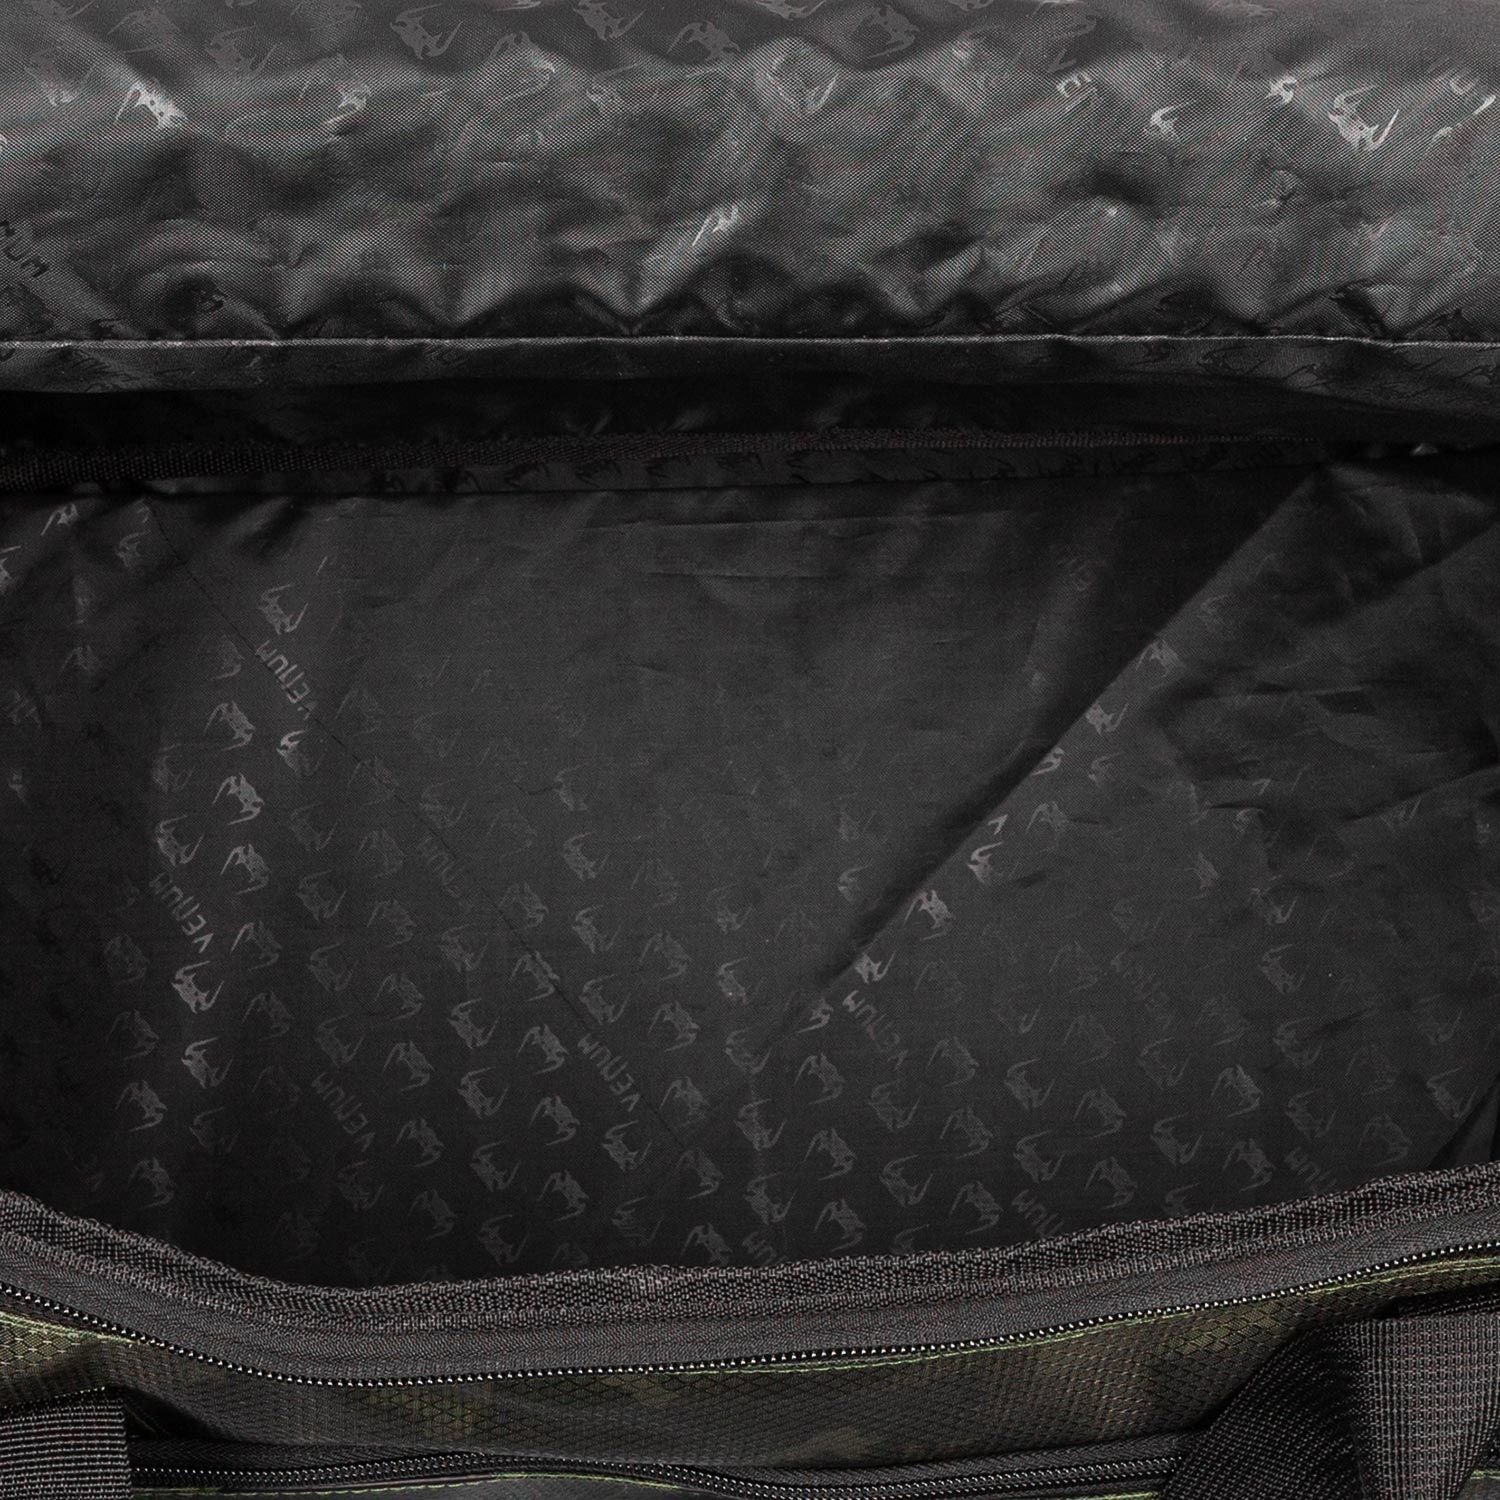 Venum Sparring Sports Bag - Khaki Camo - Best Price online Prokicksports.com